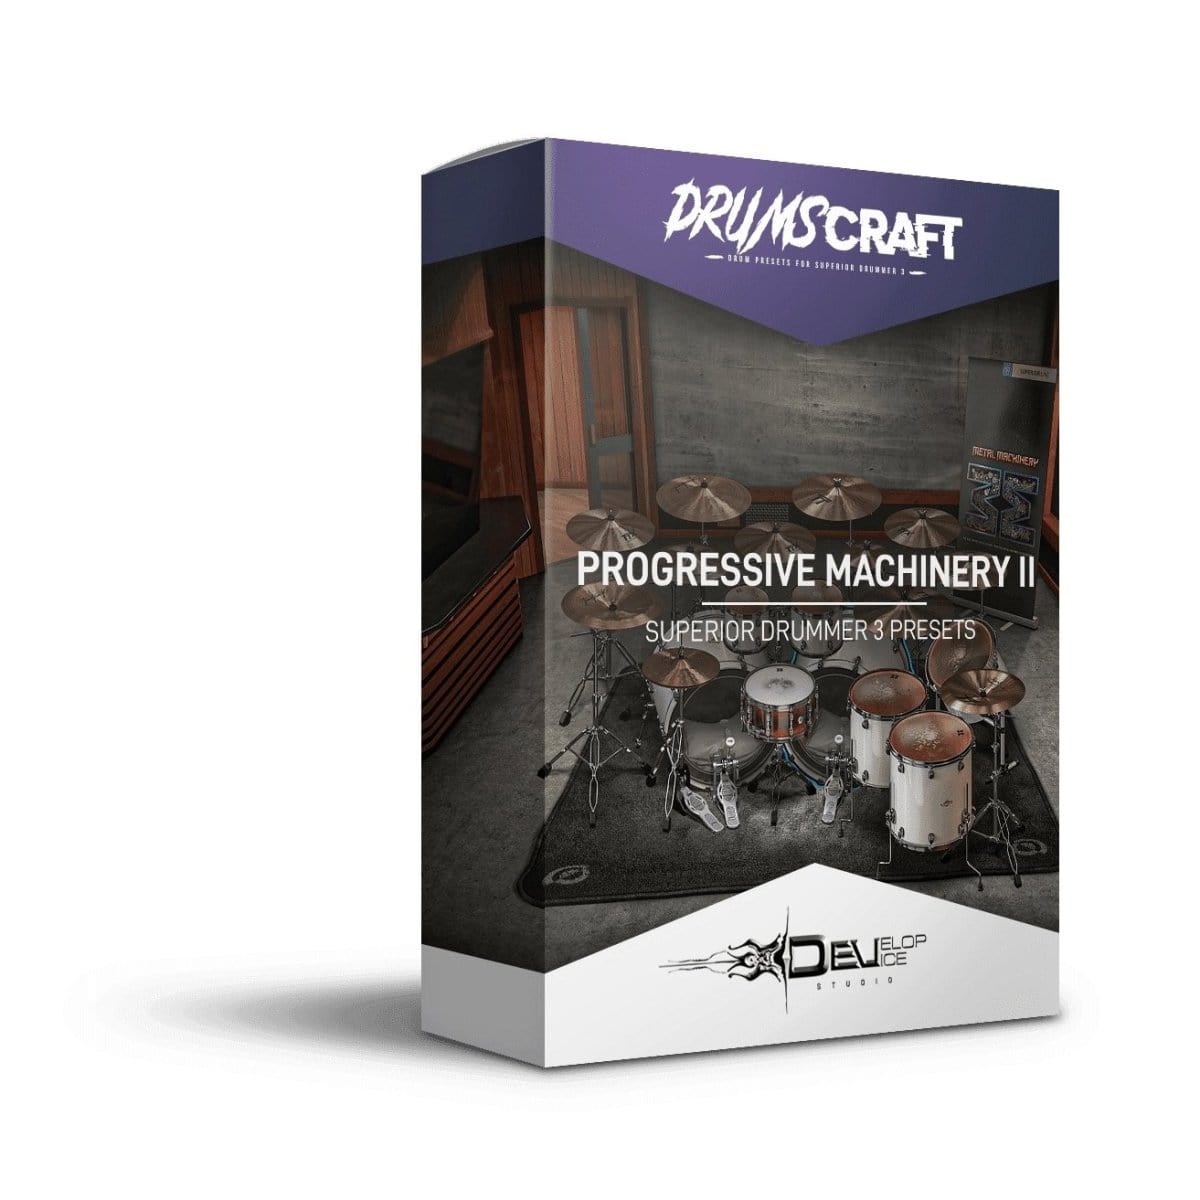 Progressive Machinery II - Superior Drummer 3 Presets by Develop Device